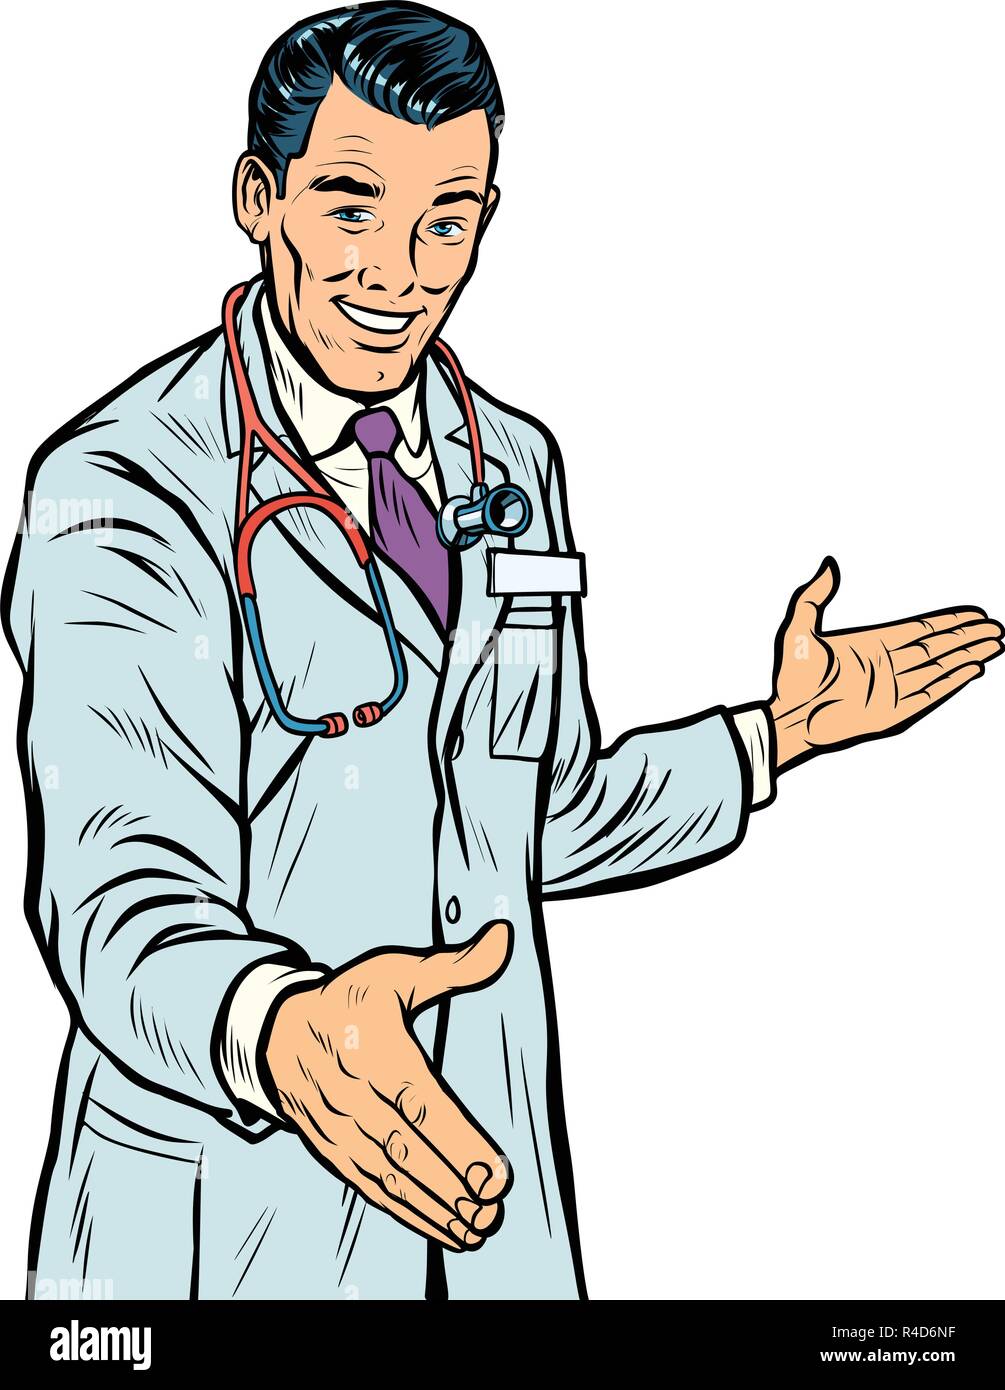 doctor handshake, medicine and health care Stock Vector